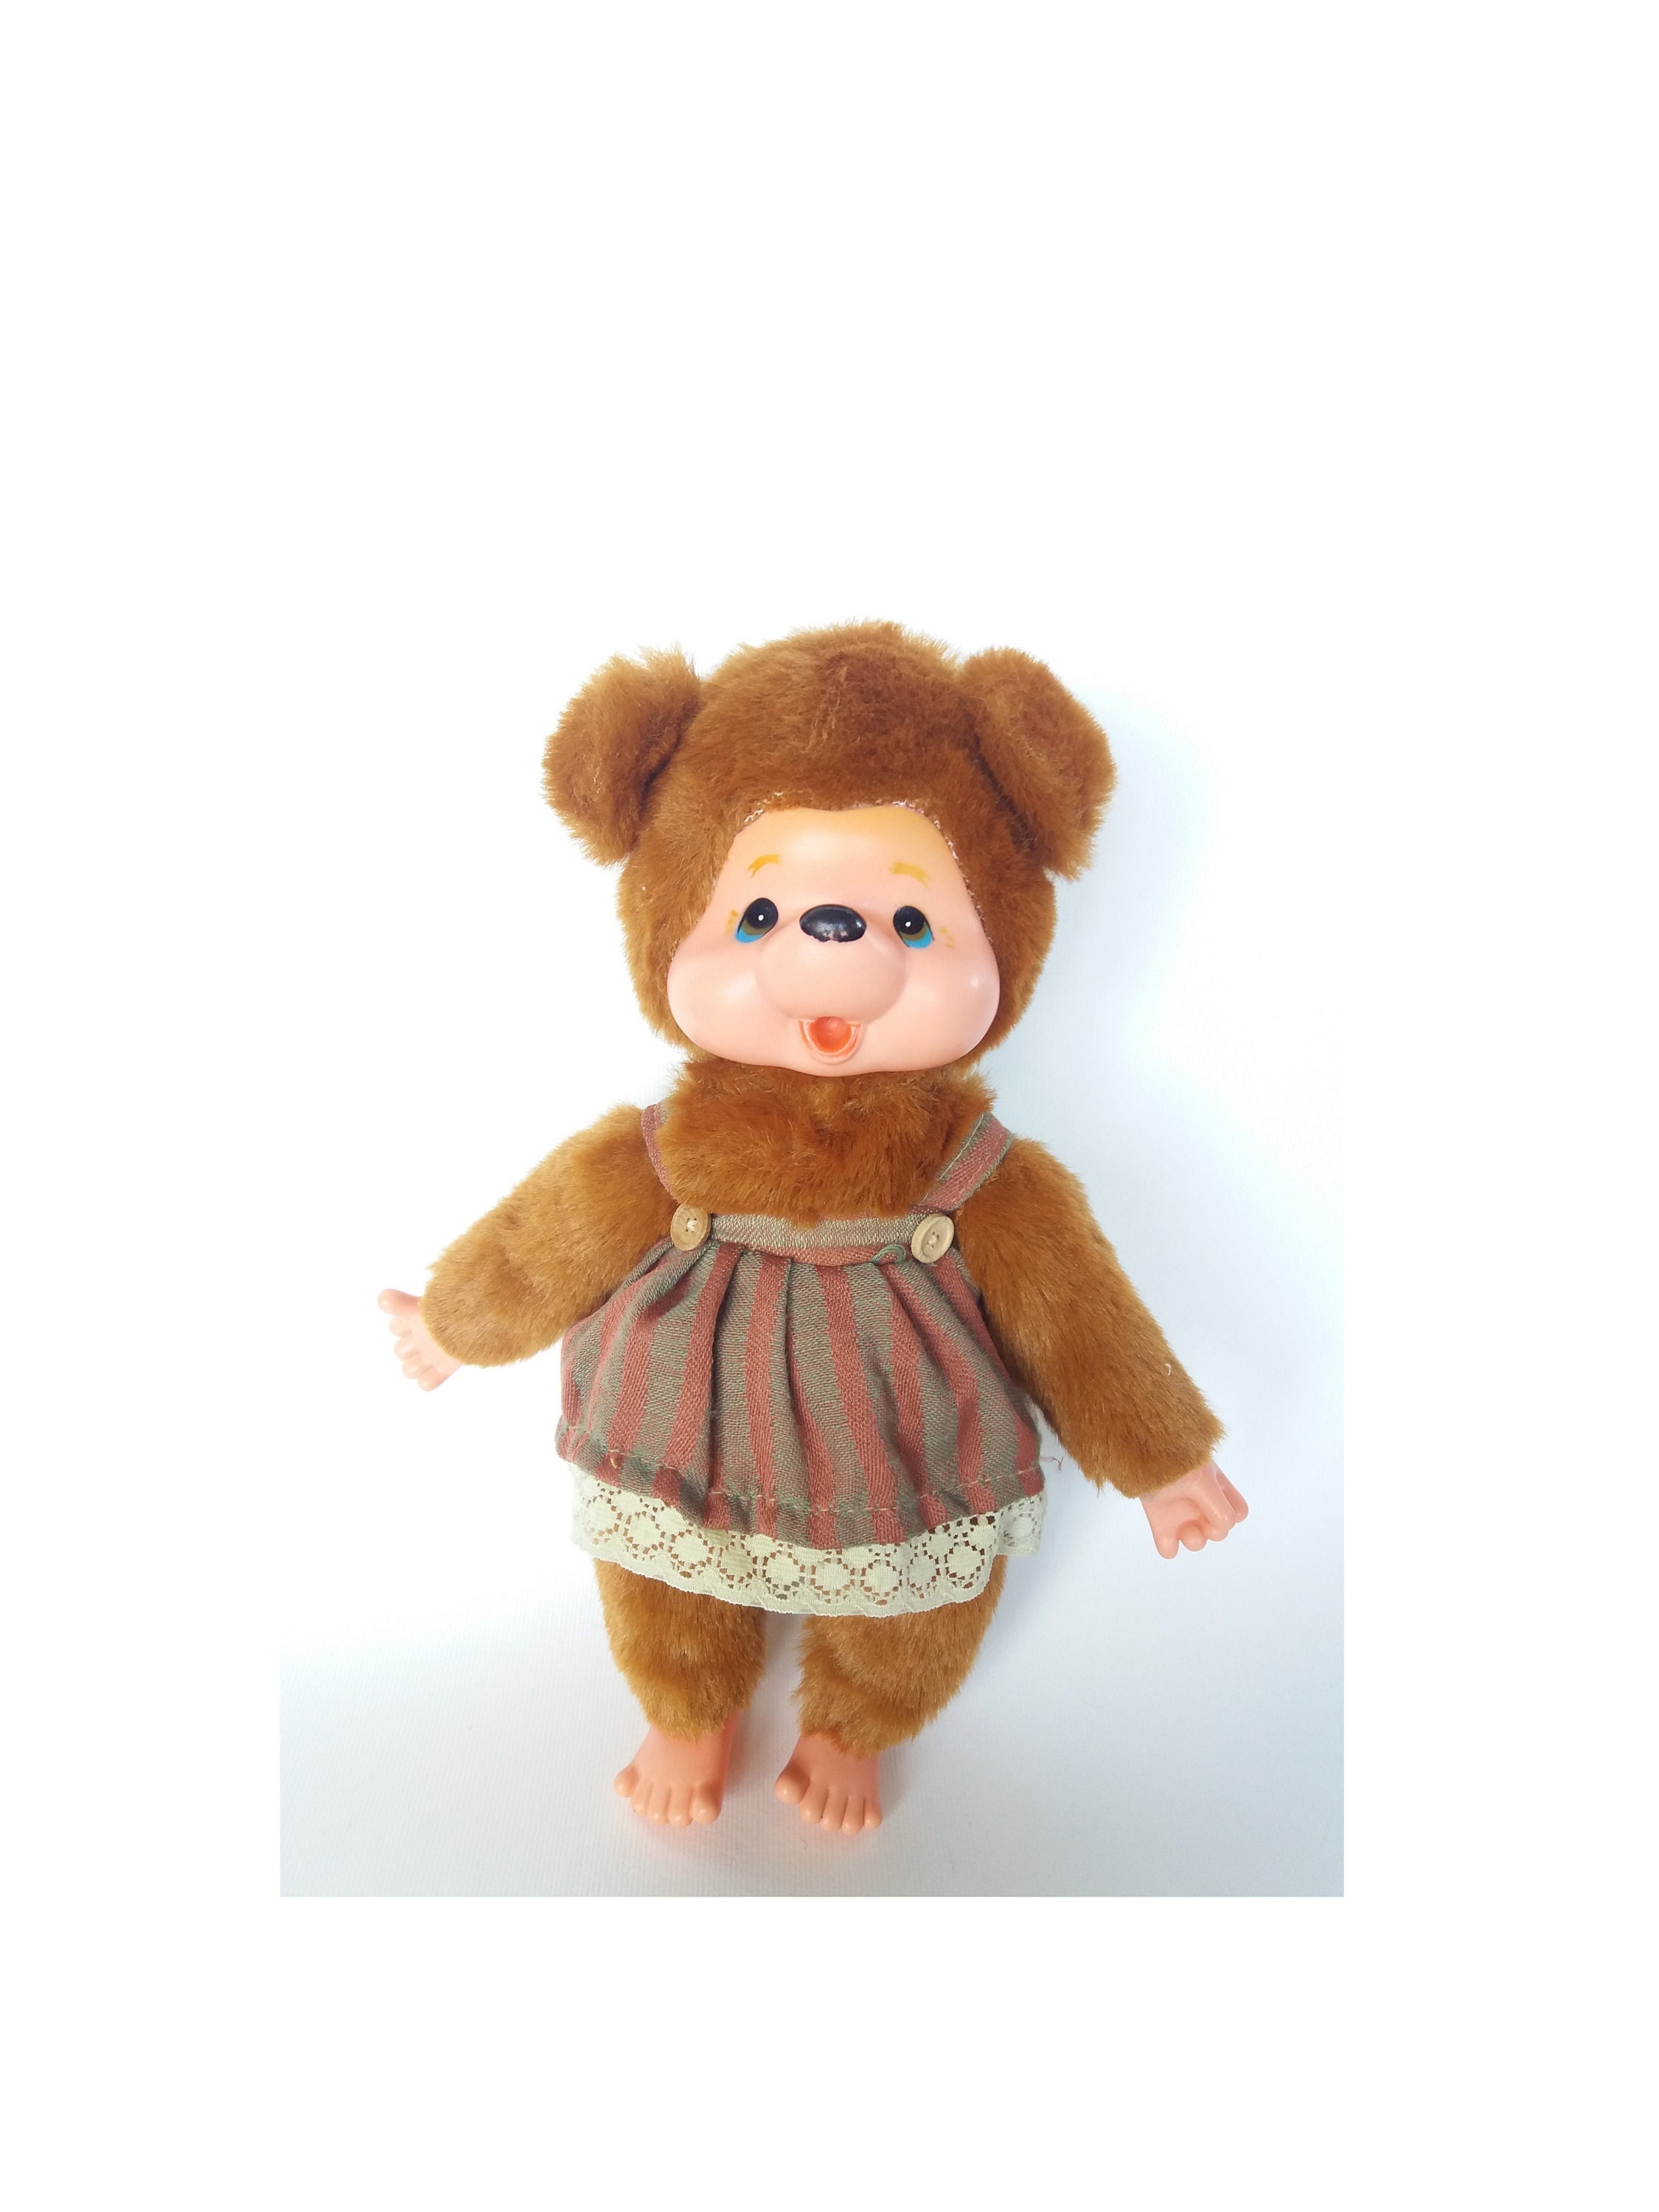 Monchichi Monchhichi Monkey Boy Doll 7inch, 1980s,original Outfit